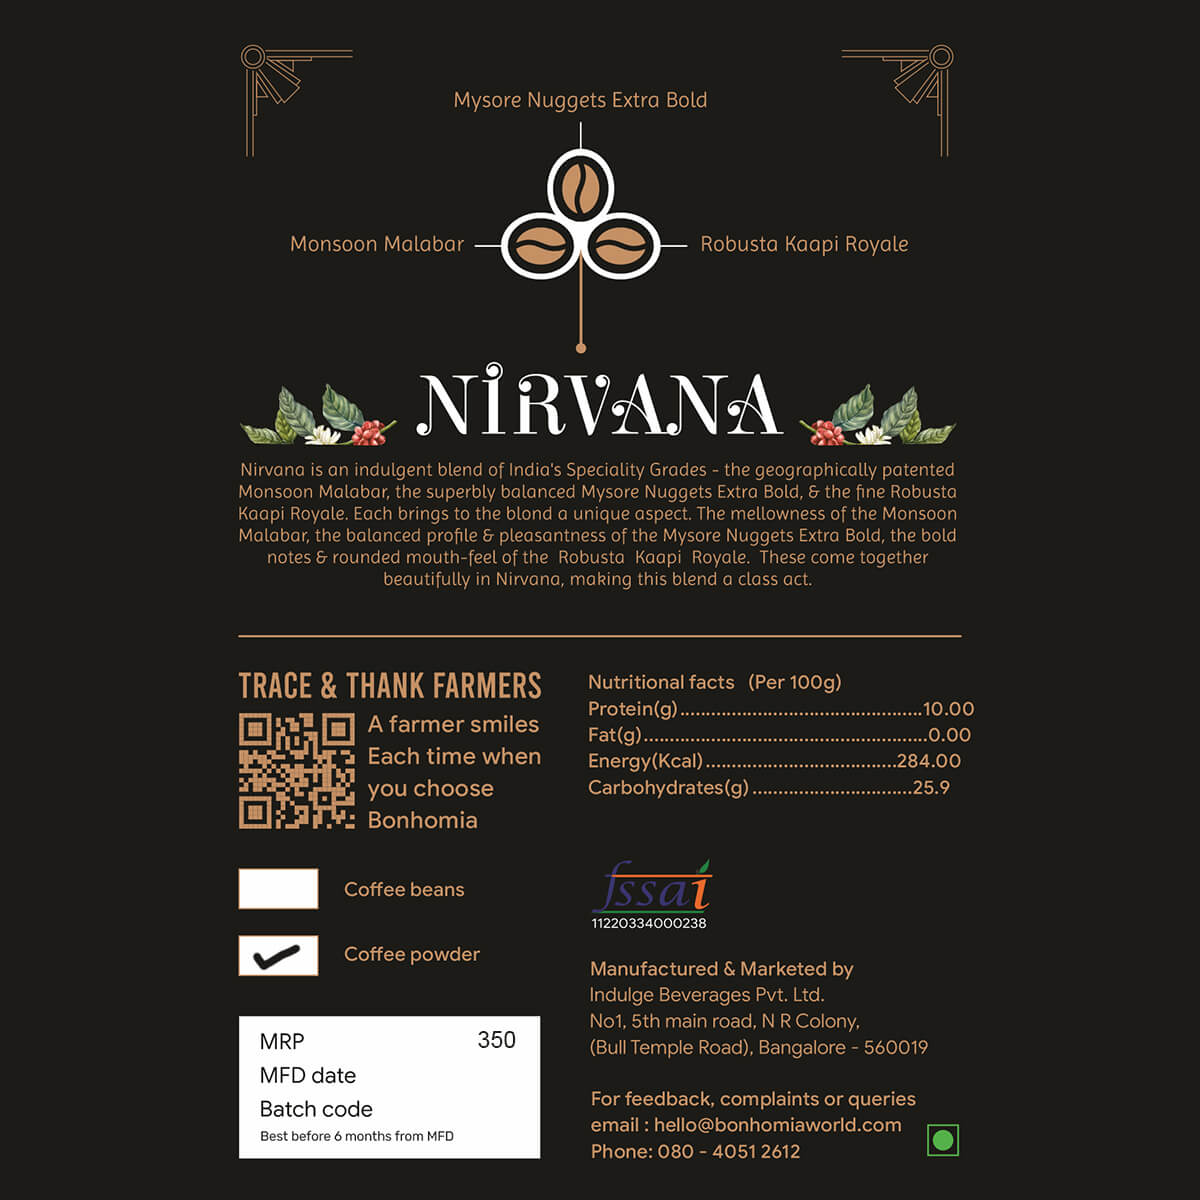 Nirvana | Specialty Ground Coffee Blend | 200 Gms